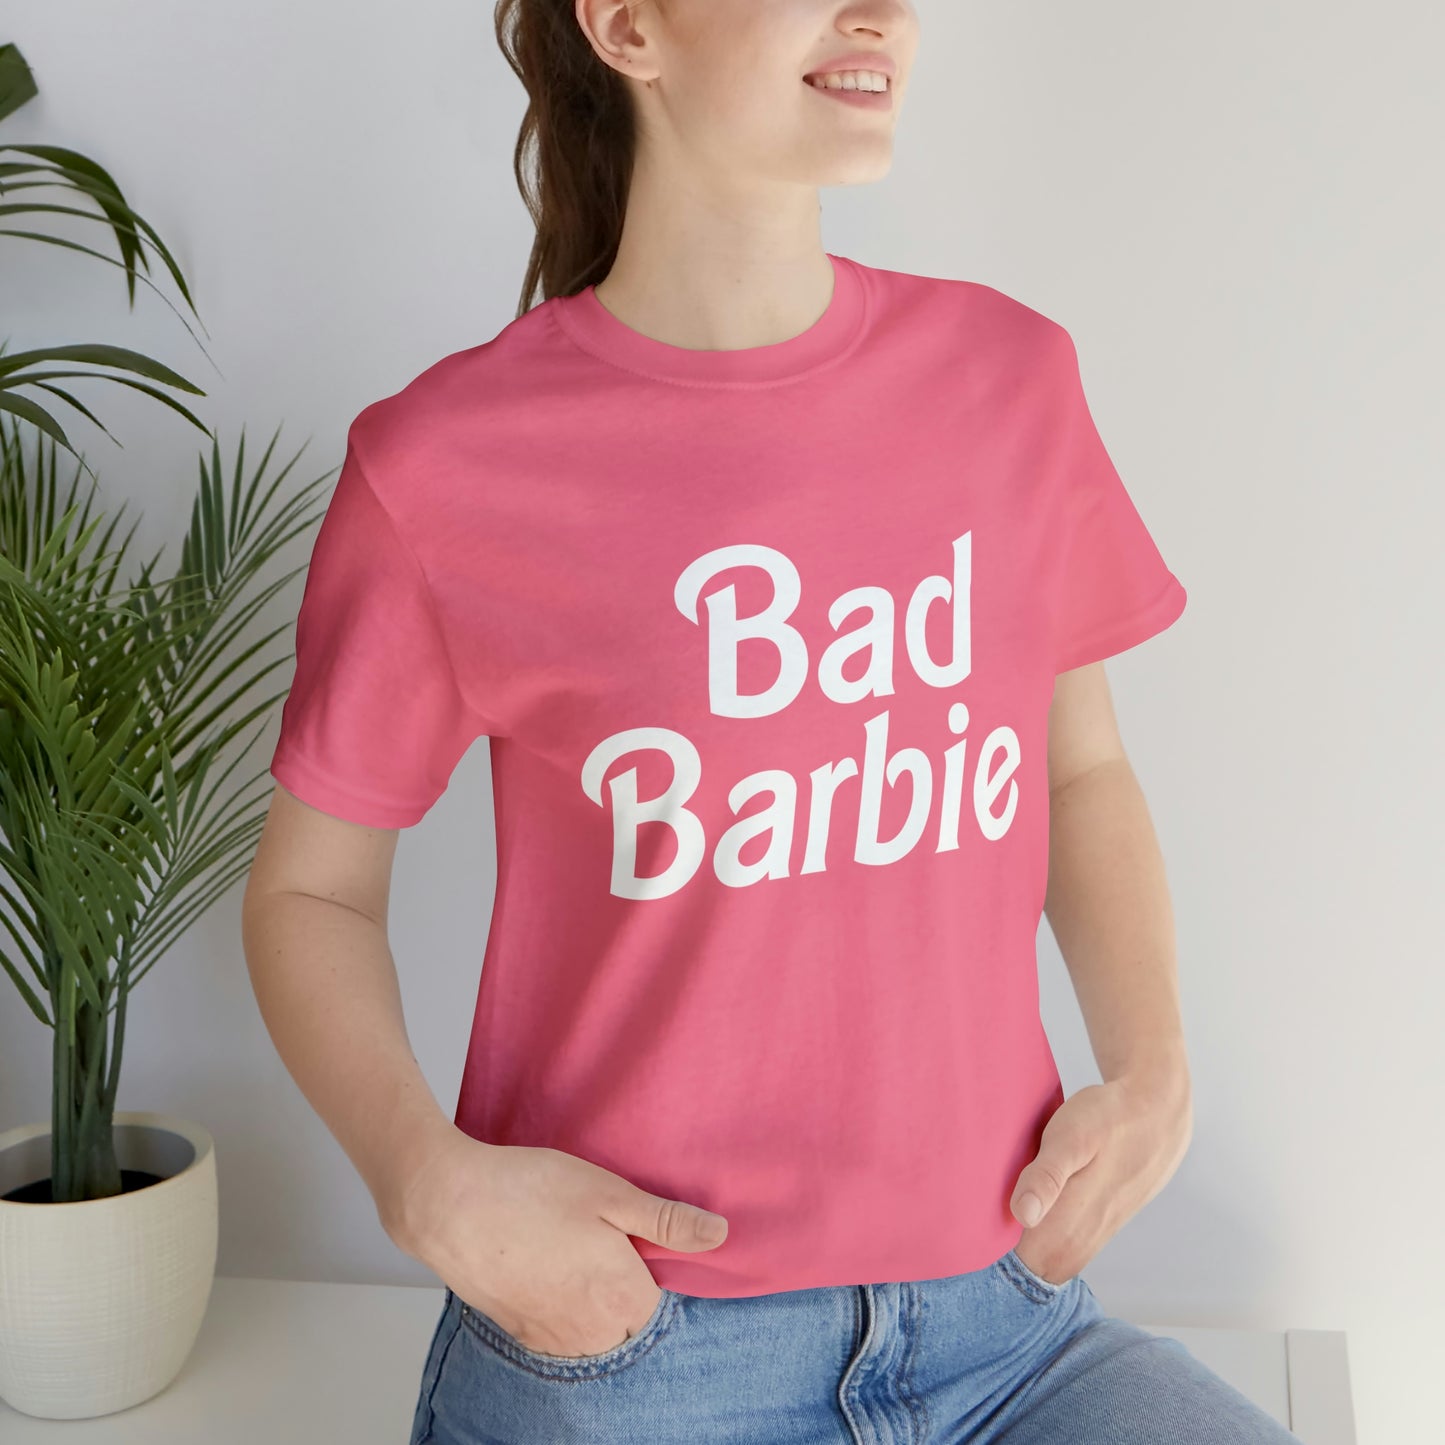 Bad Barbie